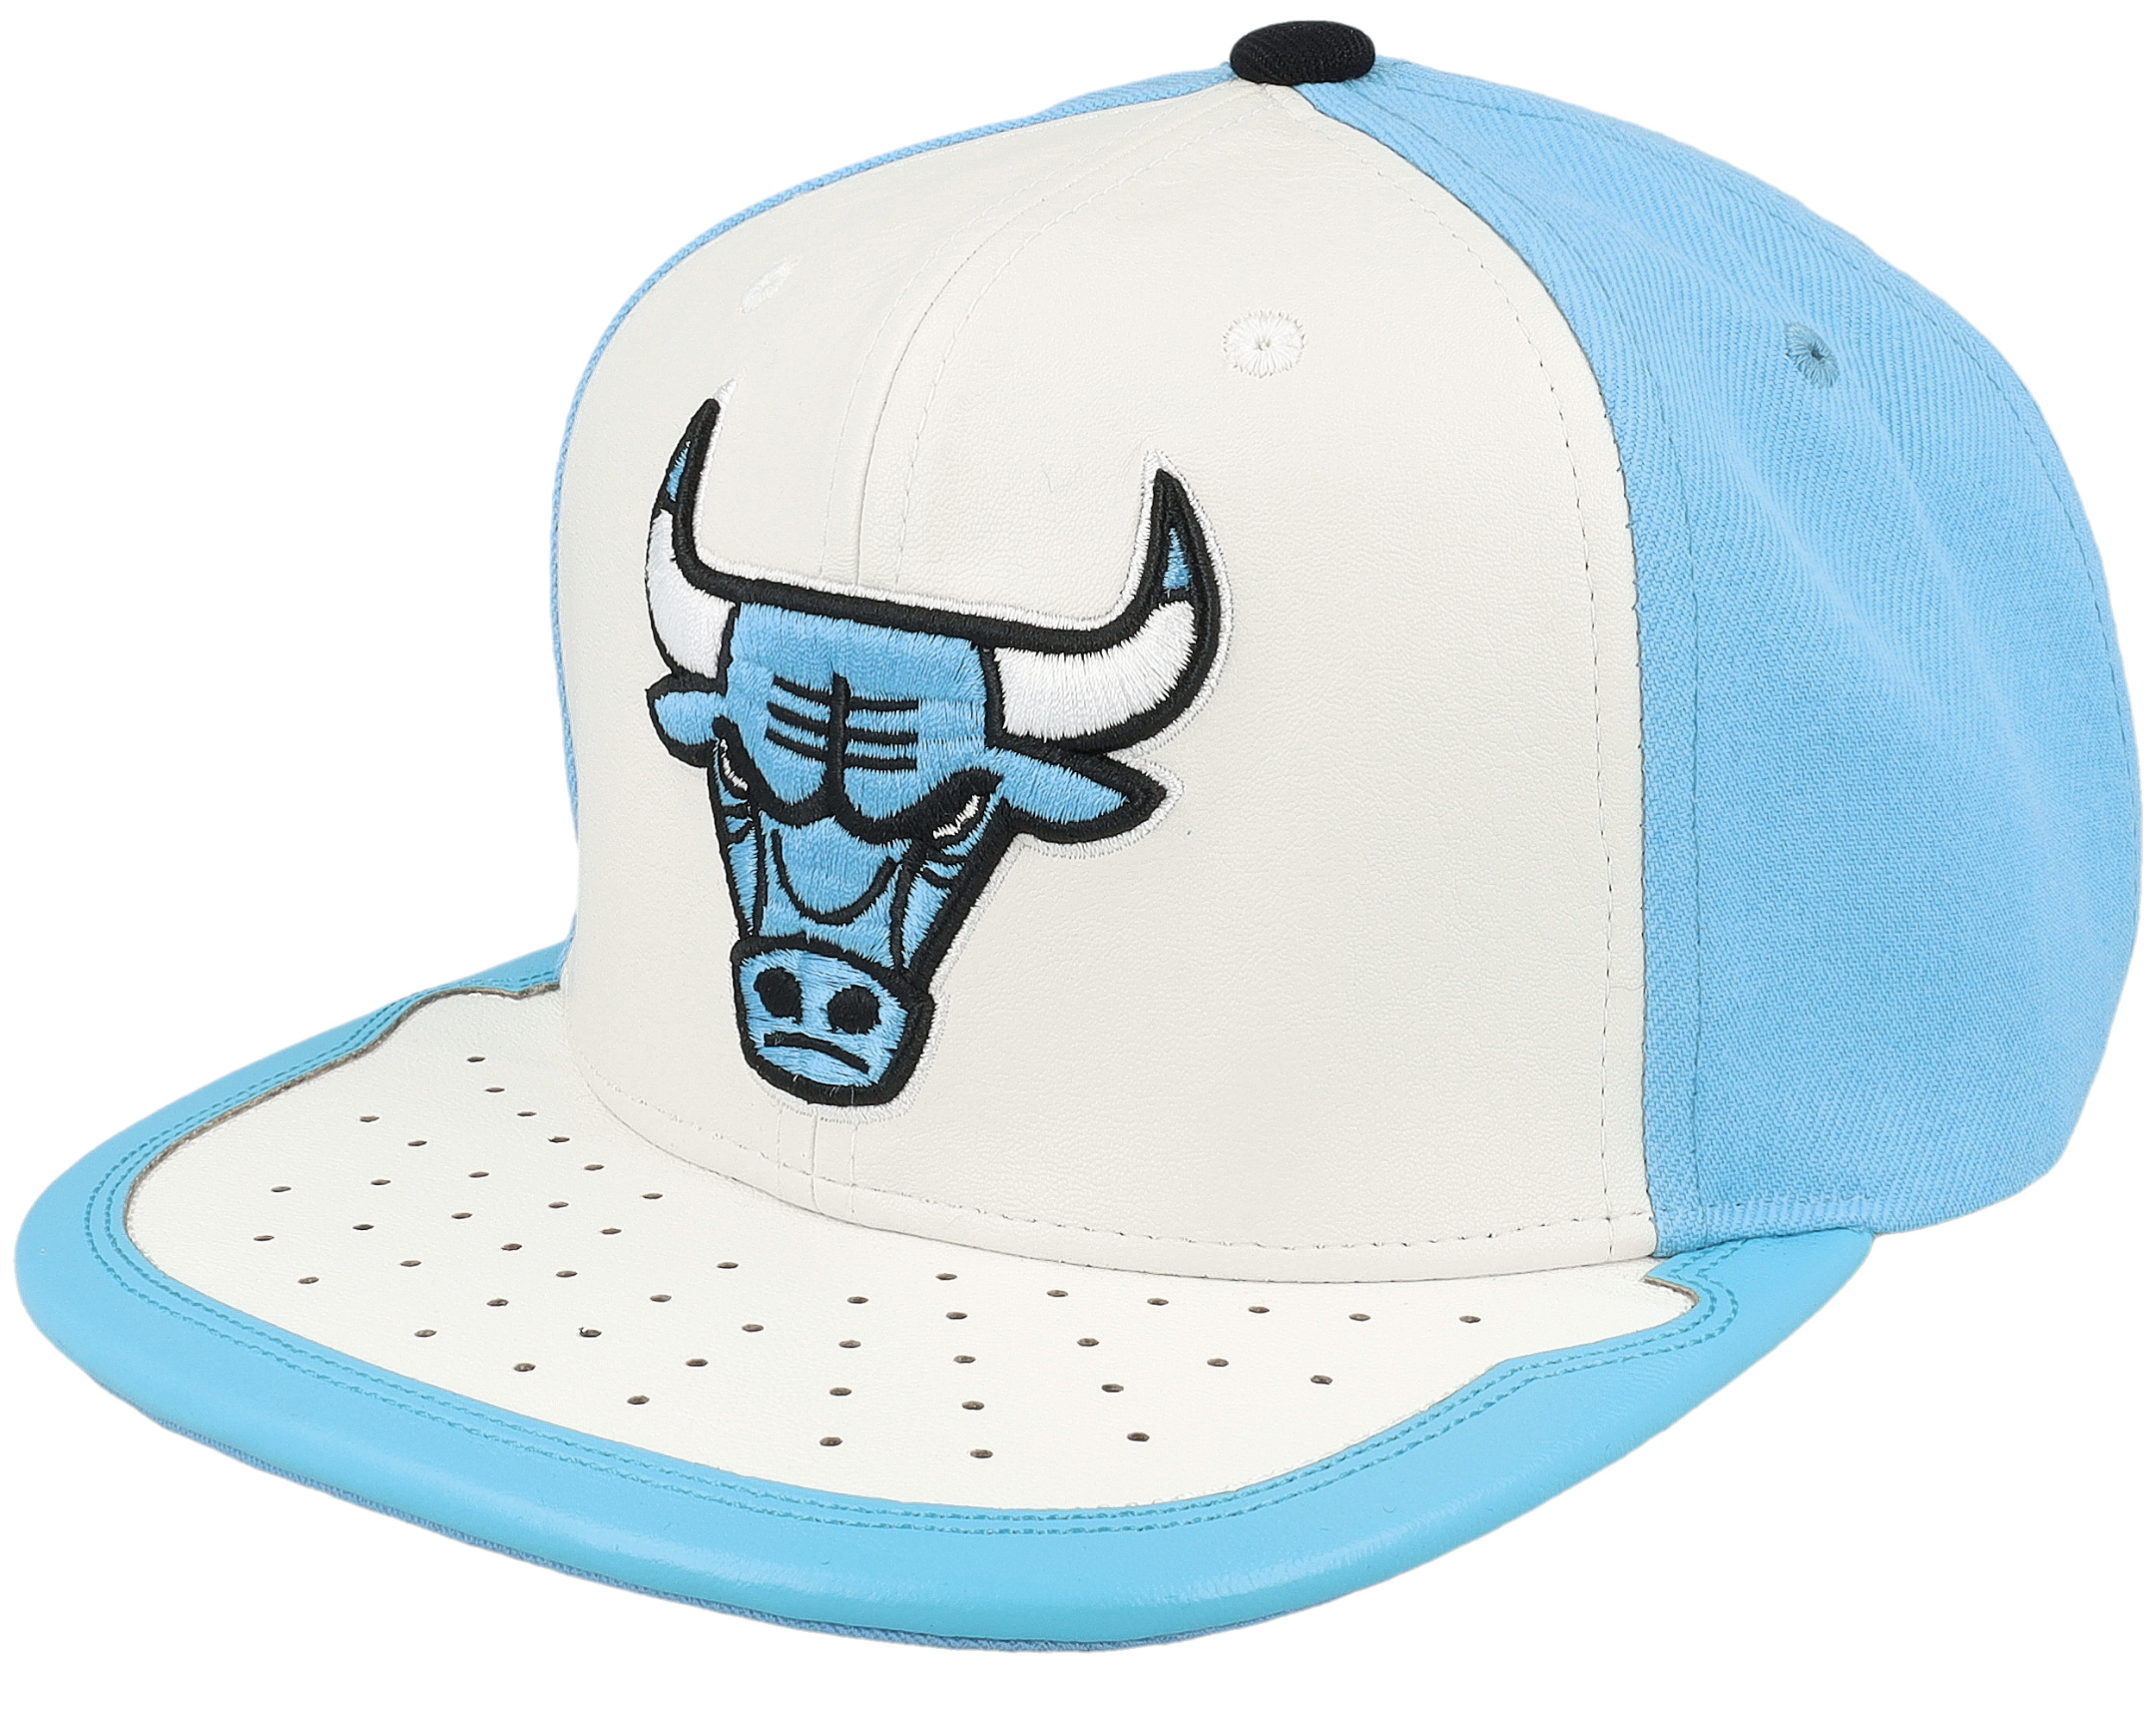 Mitchell & Ness - NBA White snapback Cap - Chicago Bulls Day 1 White/Light Blue Snapback @ Hatstore